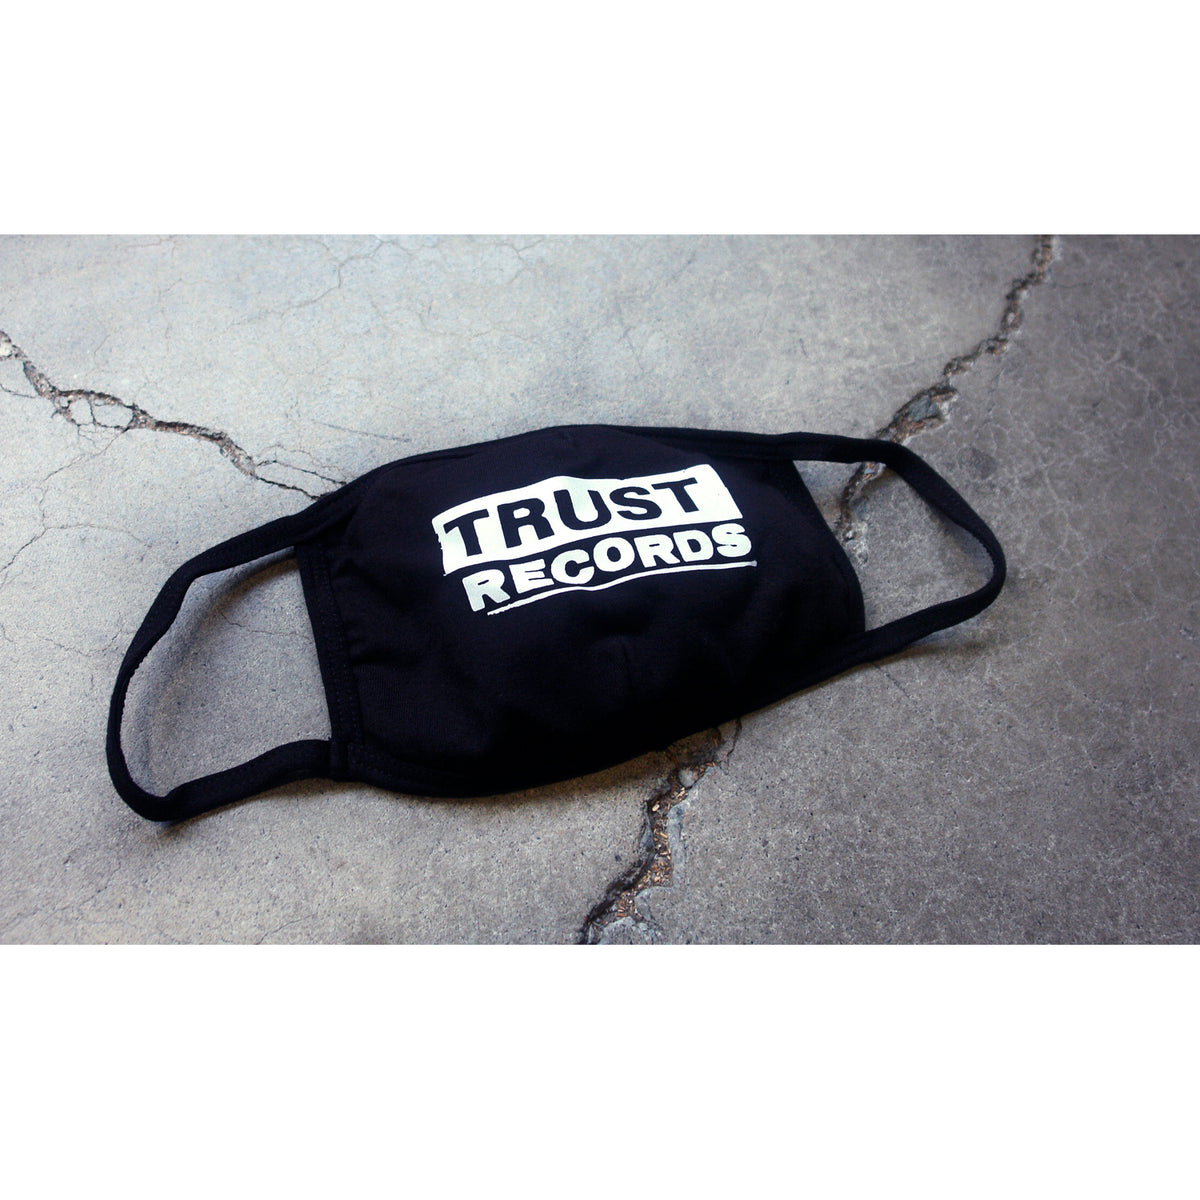 Trust Records Logo Black Face Mask